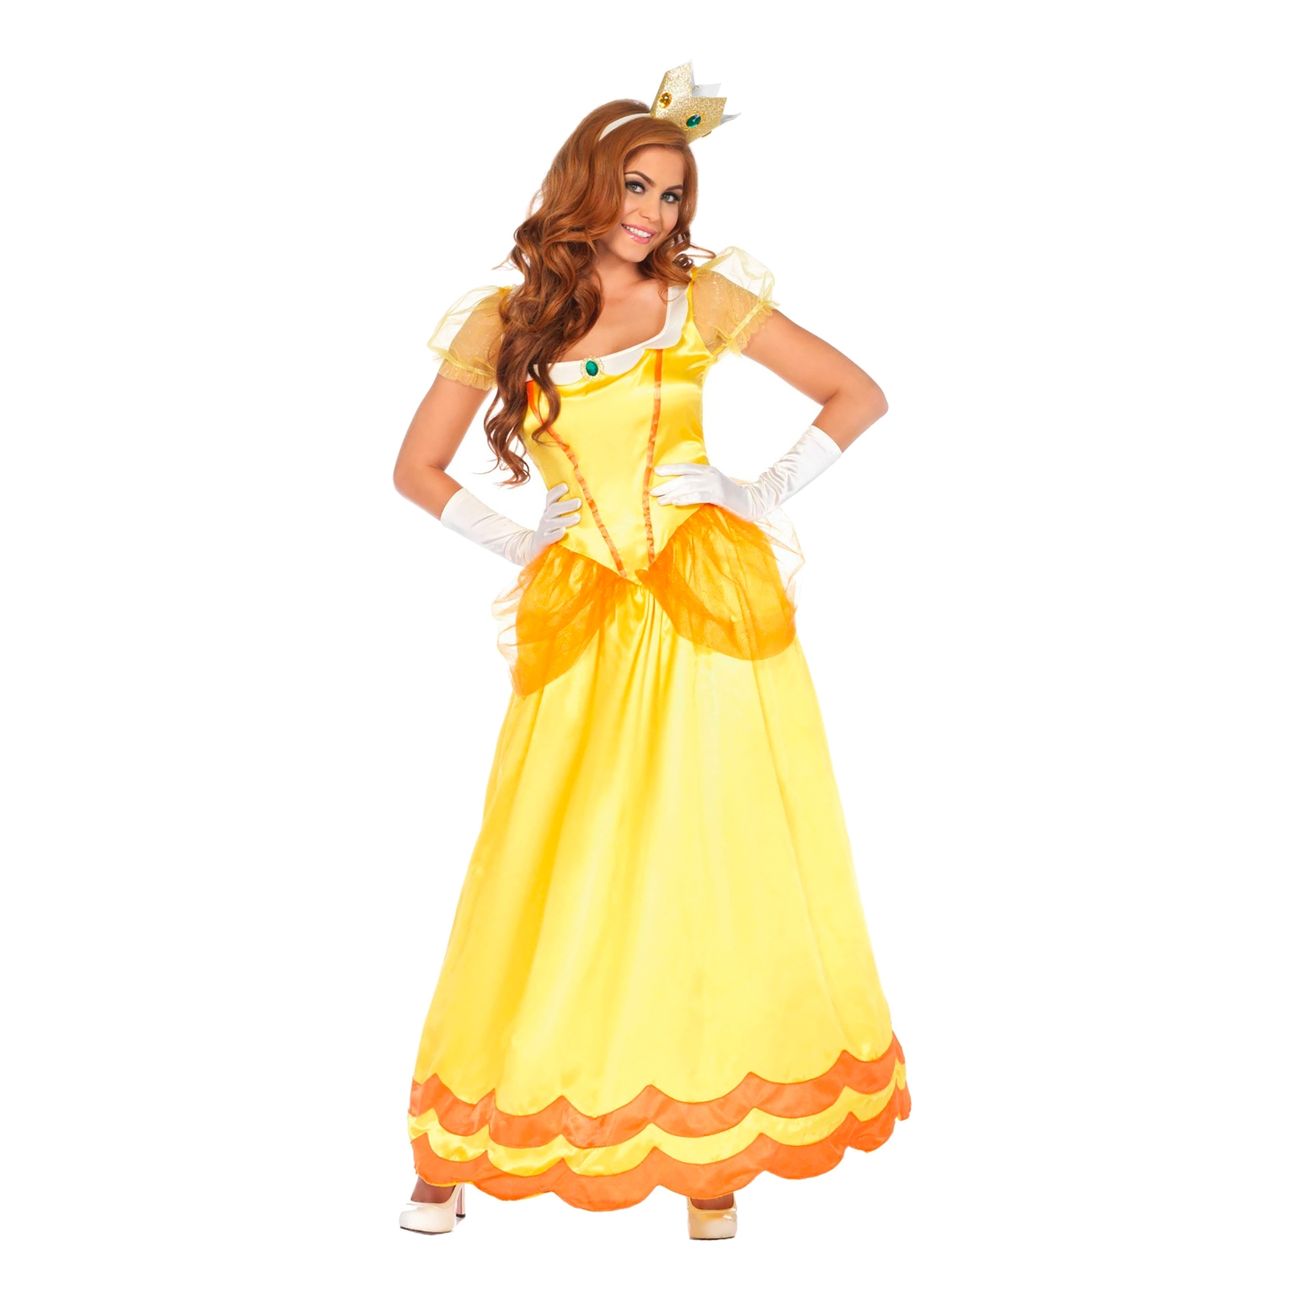 Belle voksenkostume - Disney prinsesse kostume til voksne